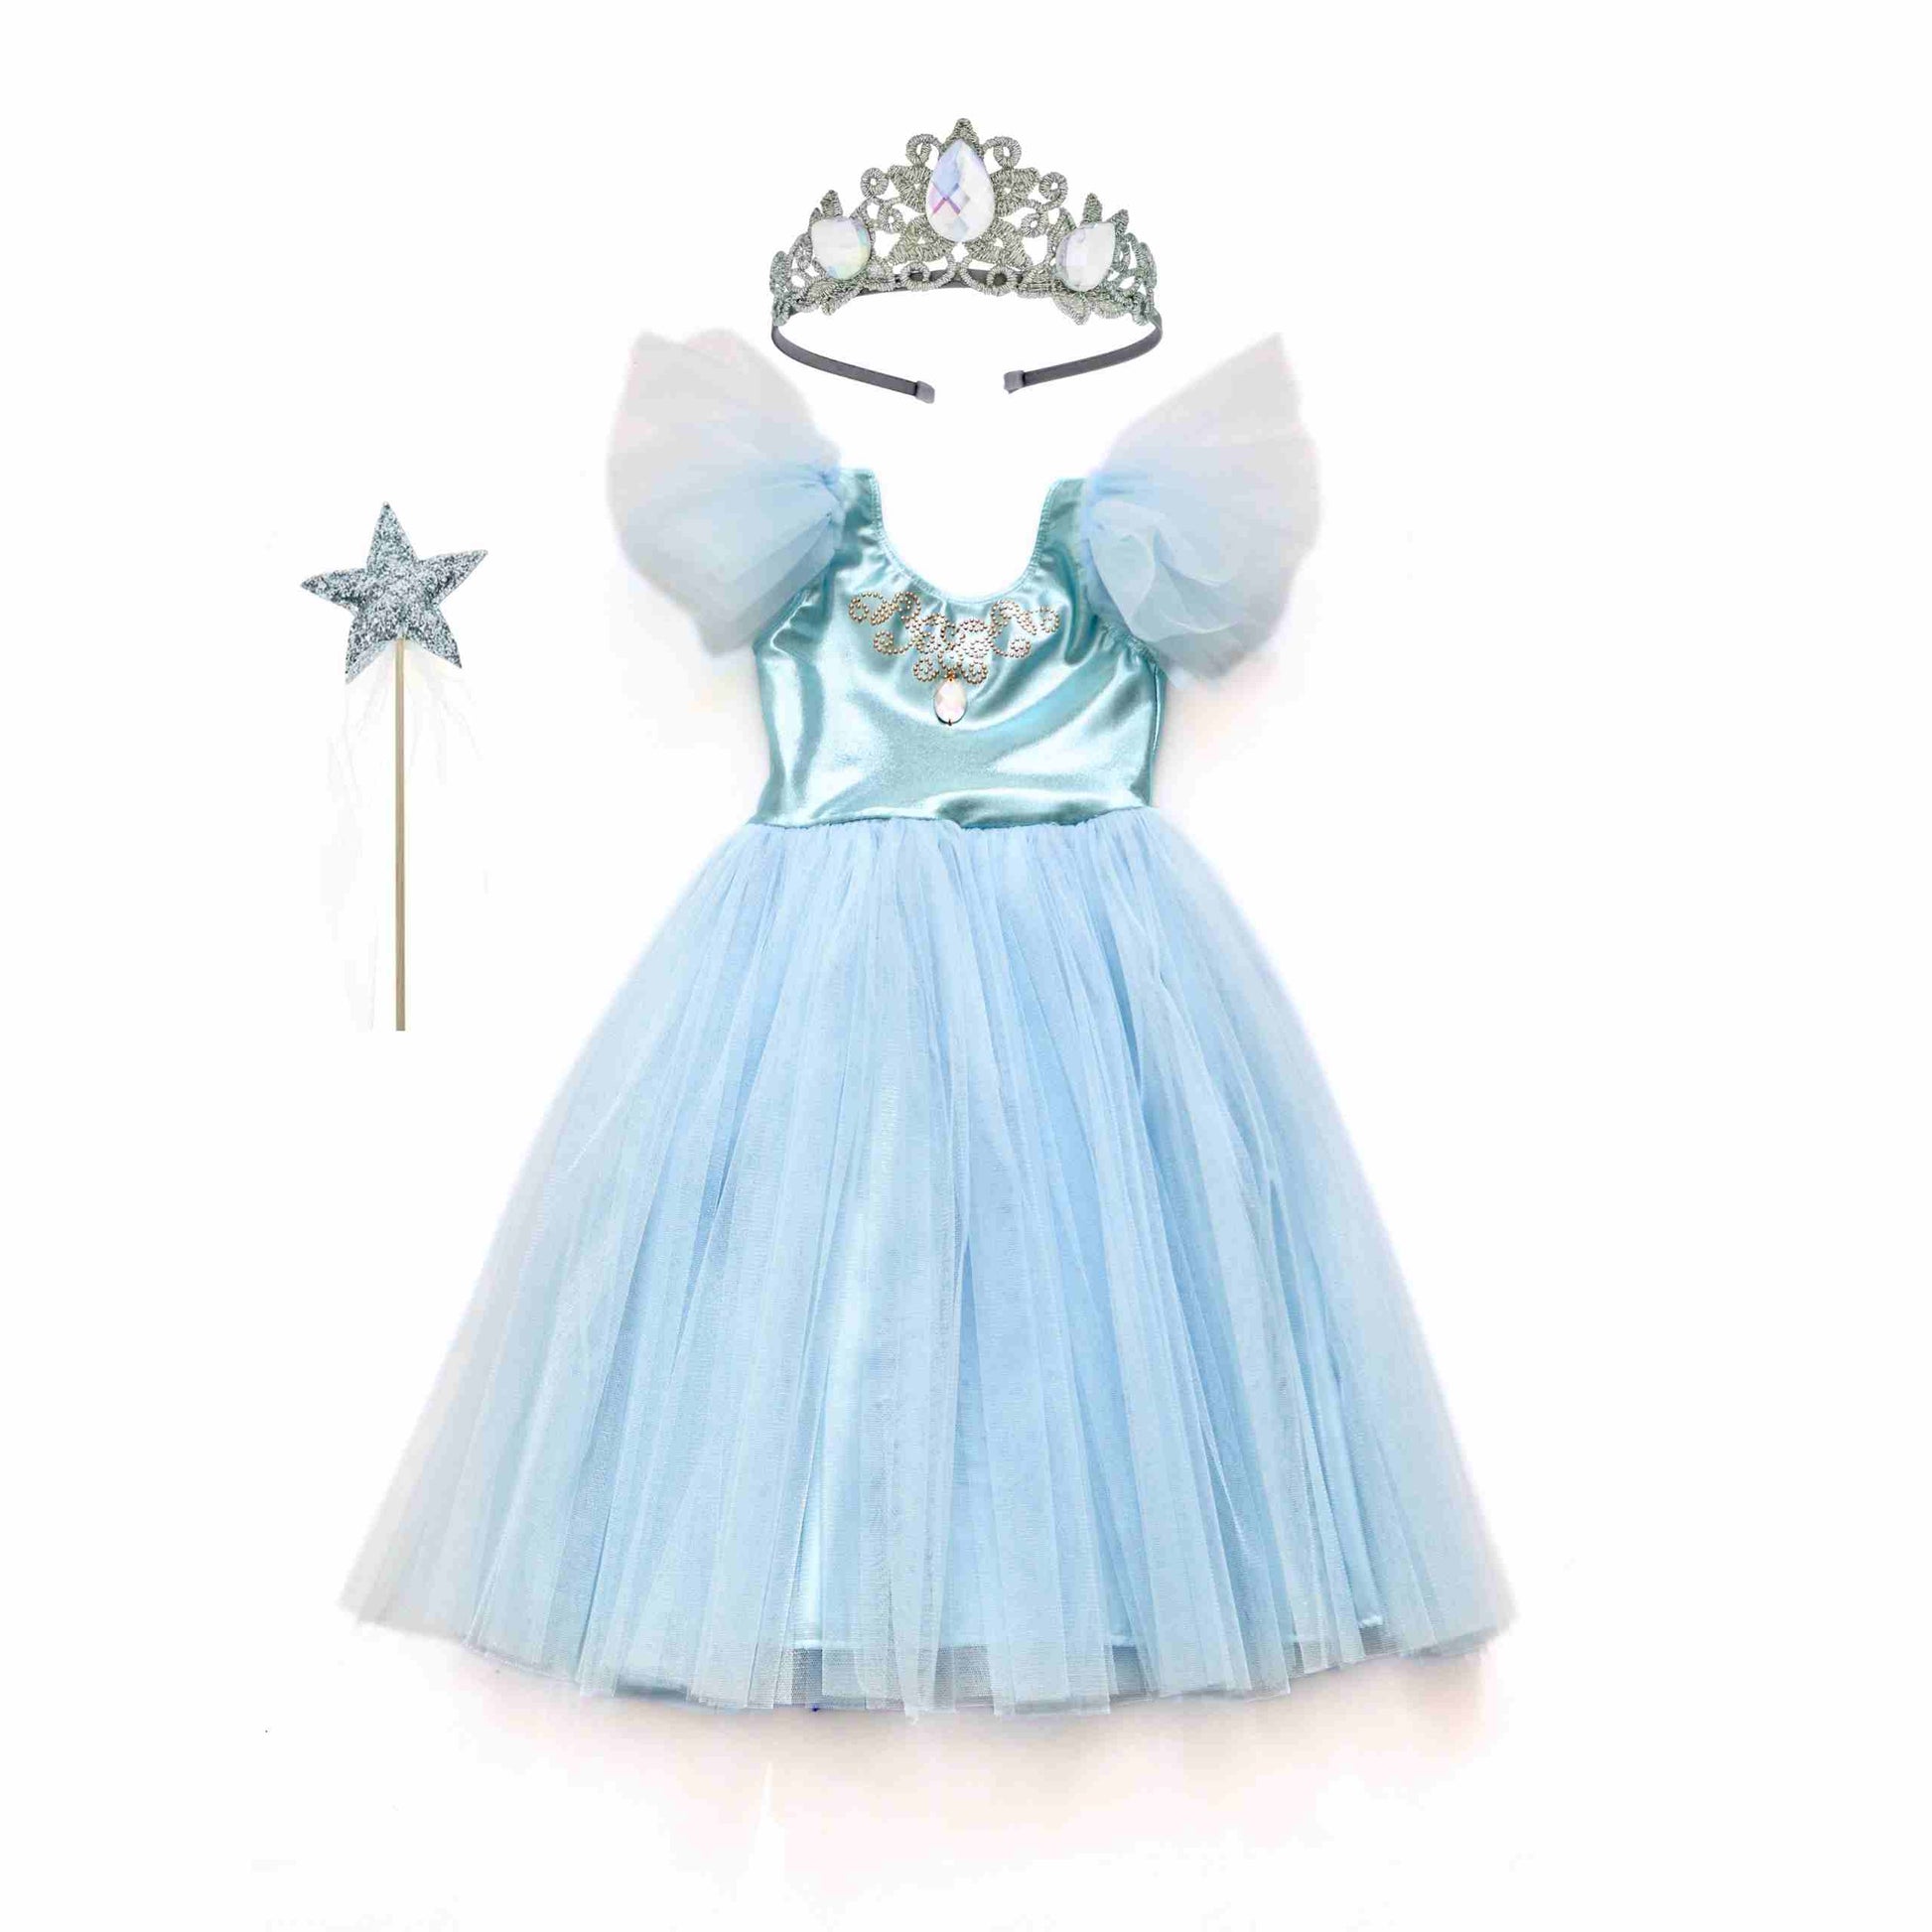 a little girl wearing a blue dress and a tiara